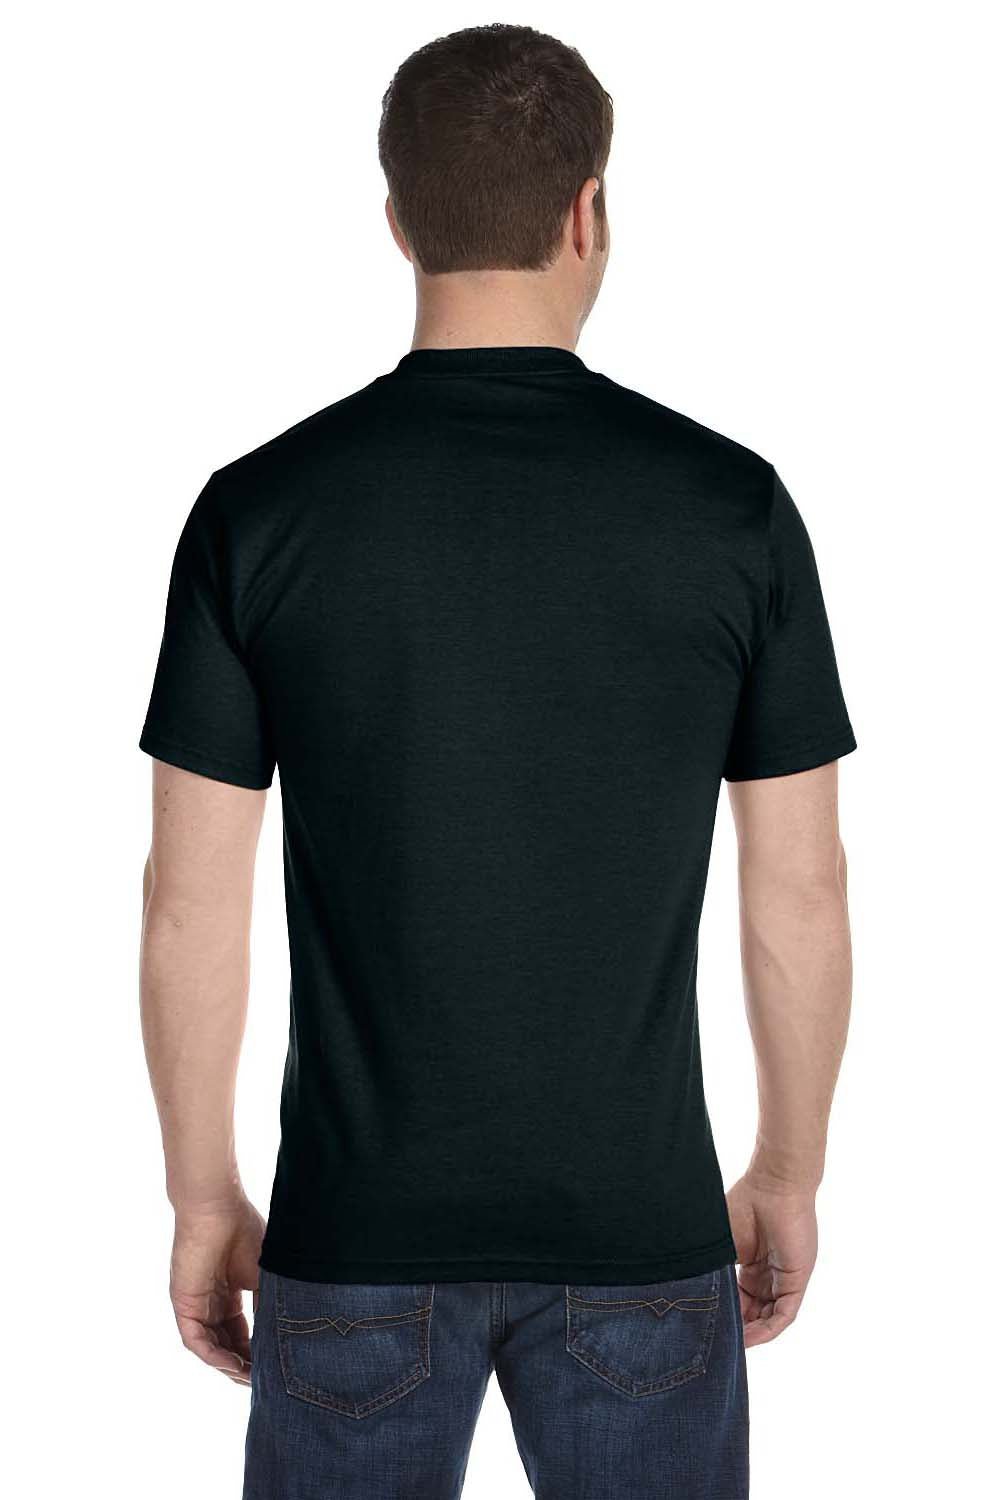 Hanes 5180 Mens Beefy-T Short Sleeve Crewneck T-Shirt Black Back